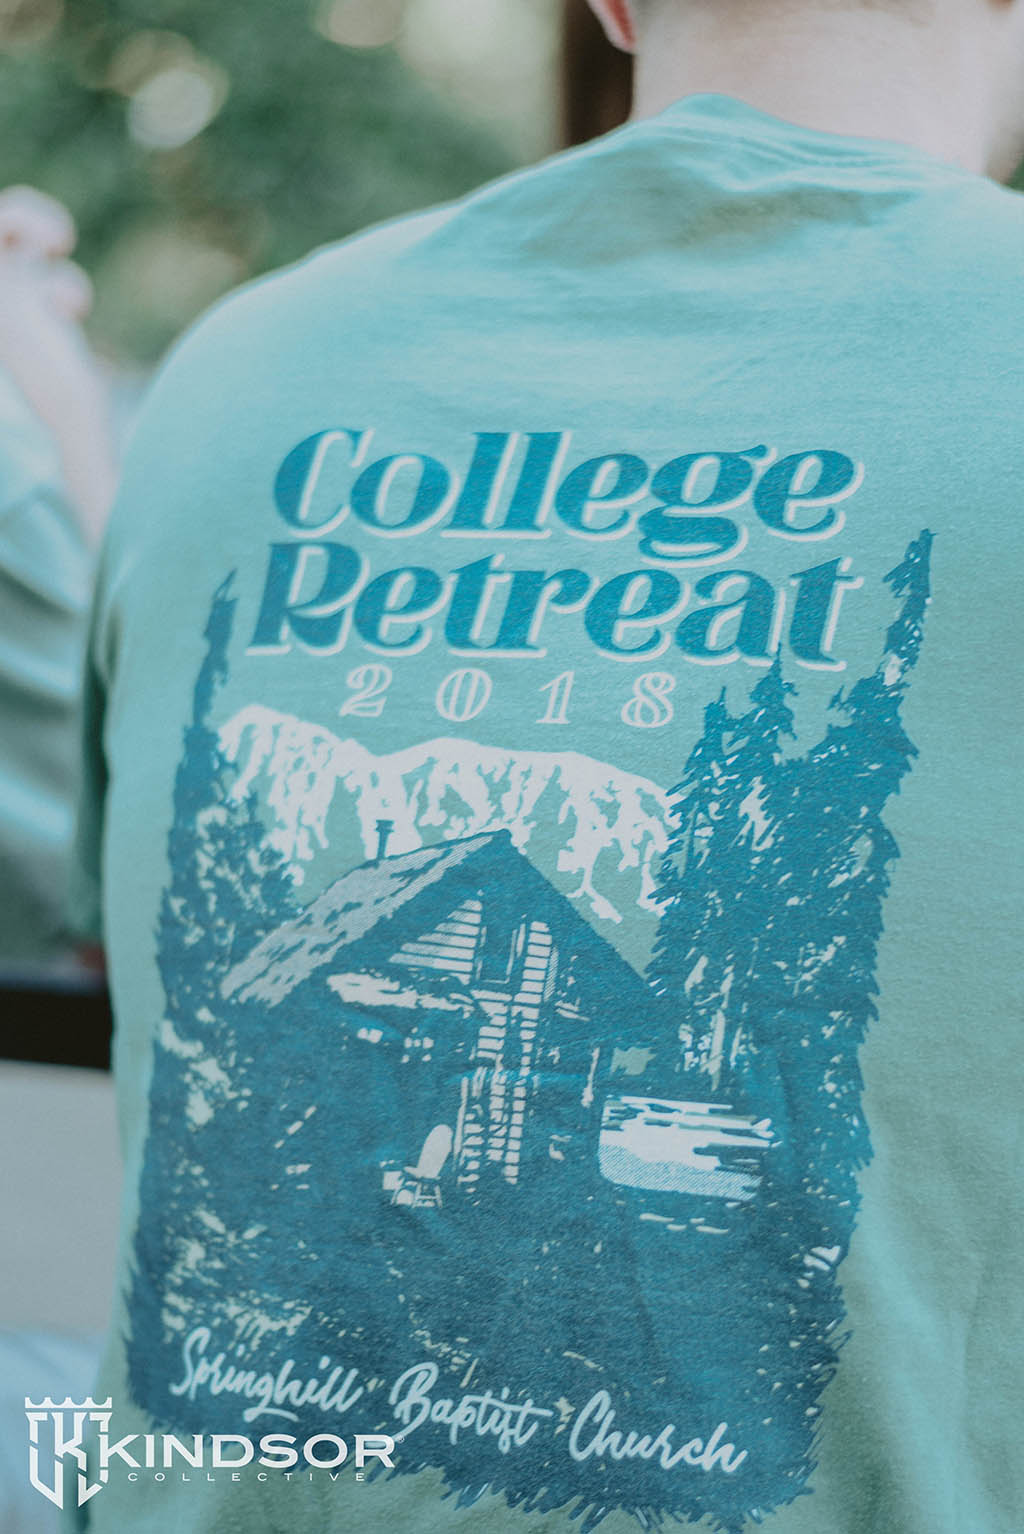 Springhill Baptist Church College Retreat Tshirt